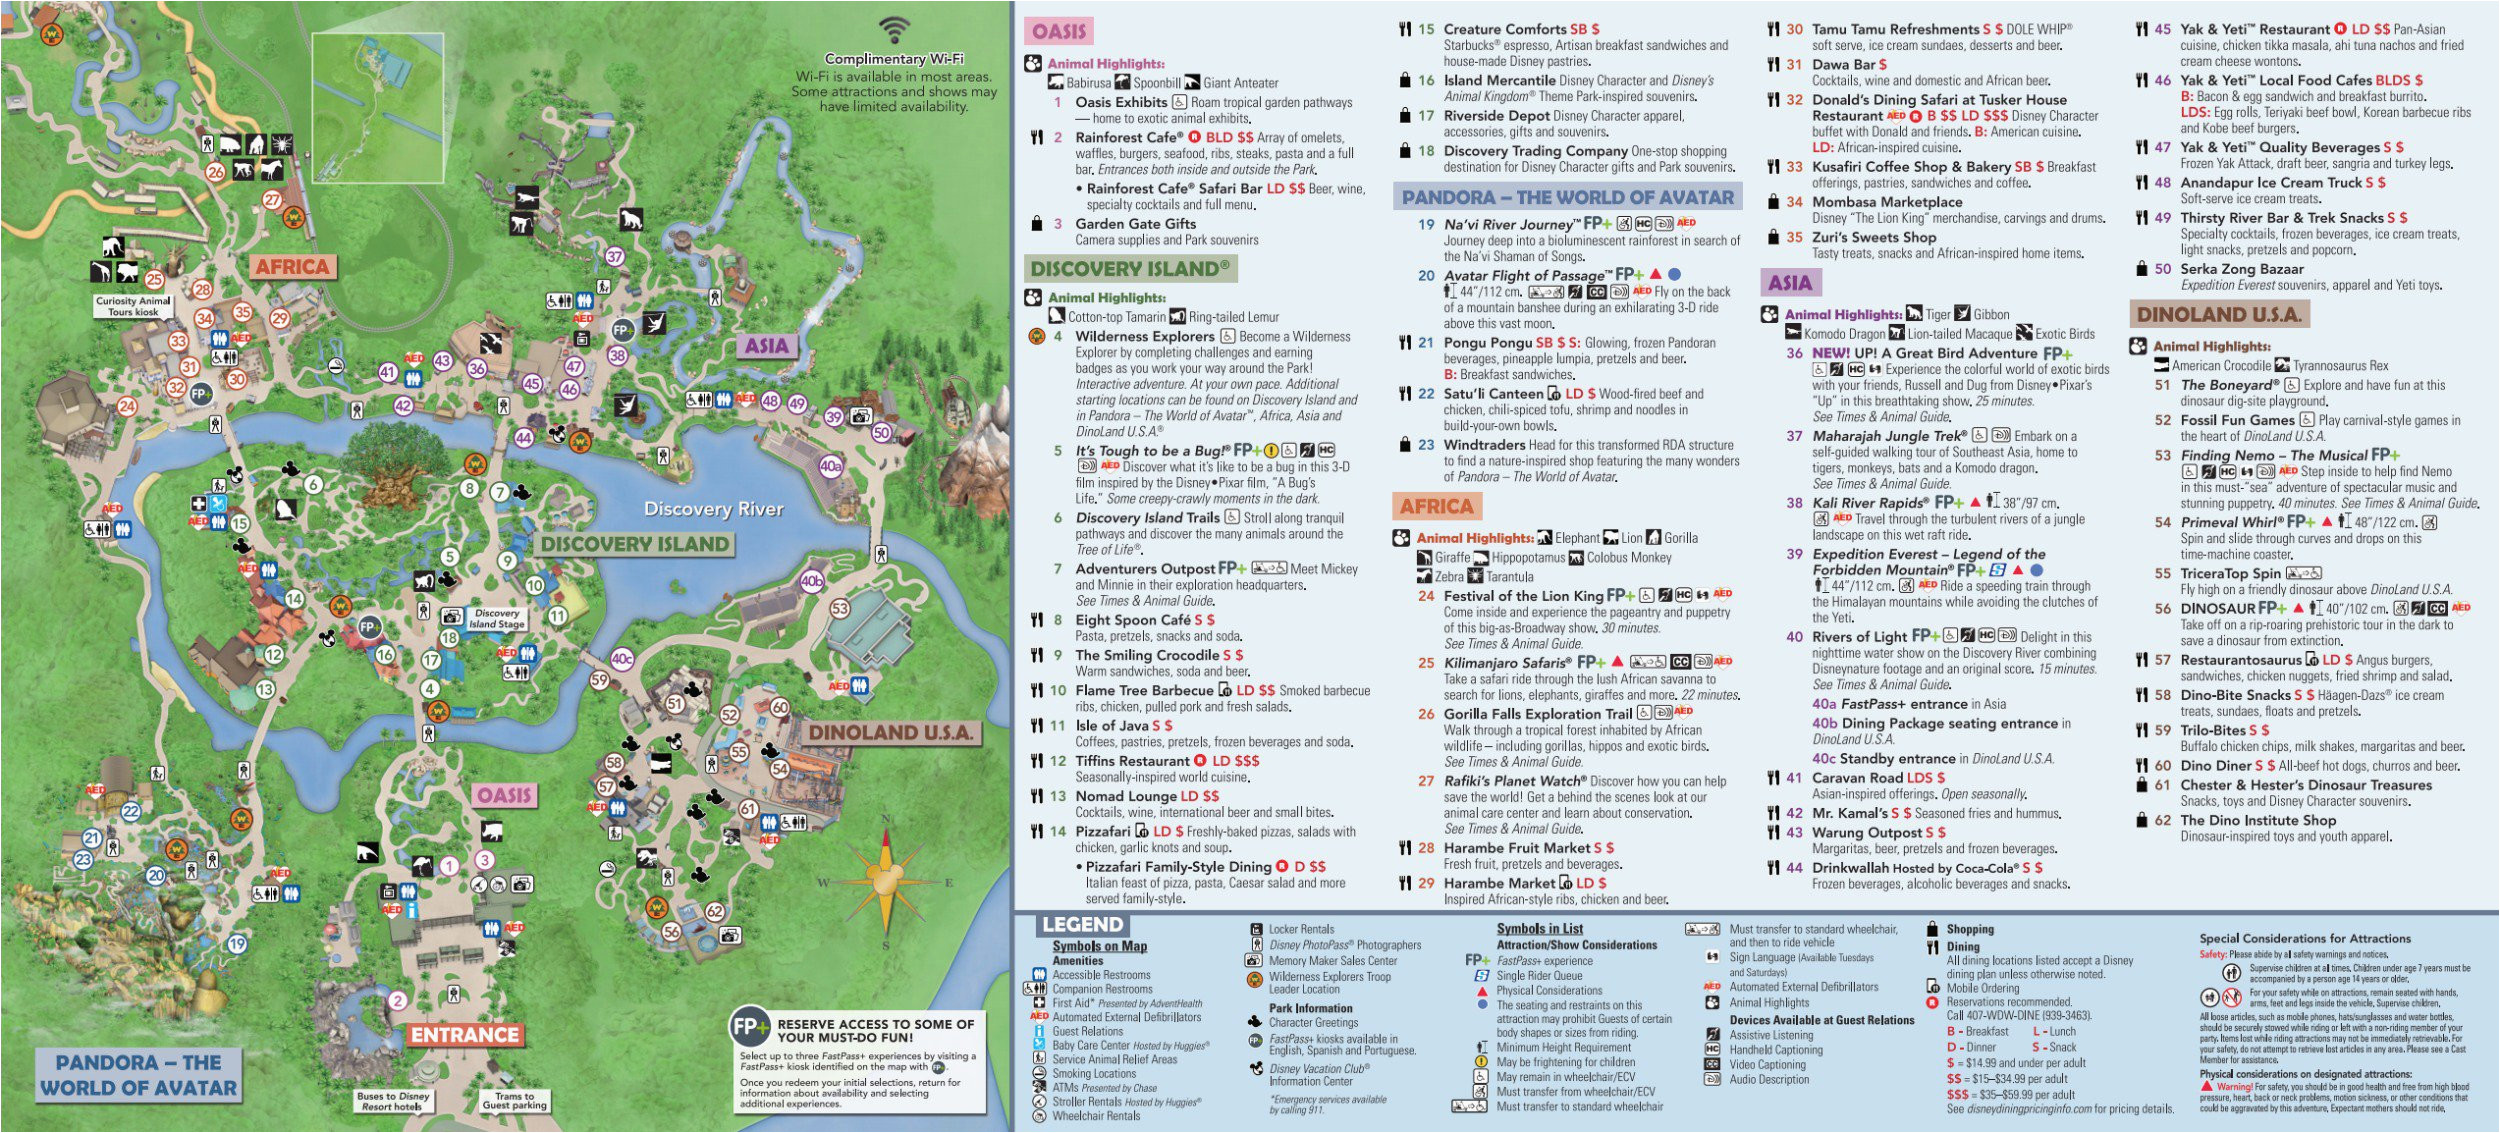 disney s animal kingdom map theme park map